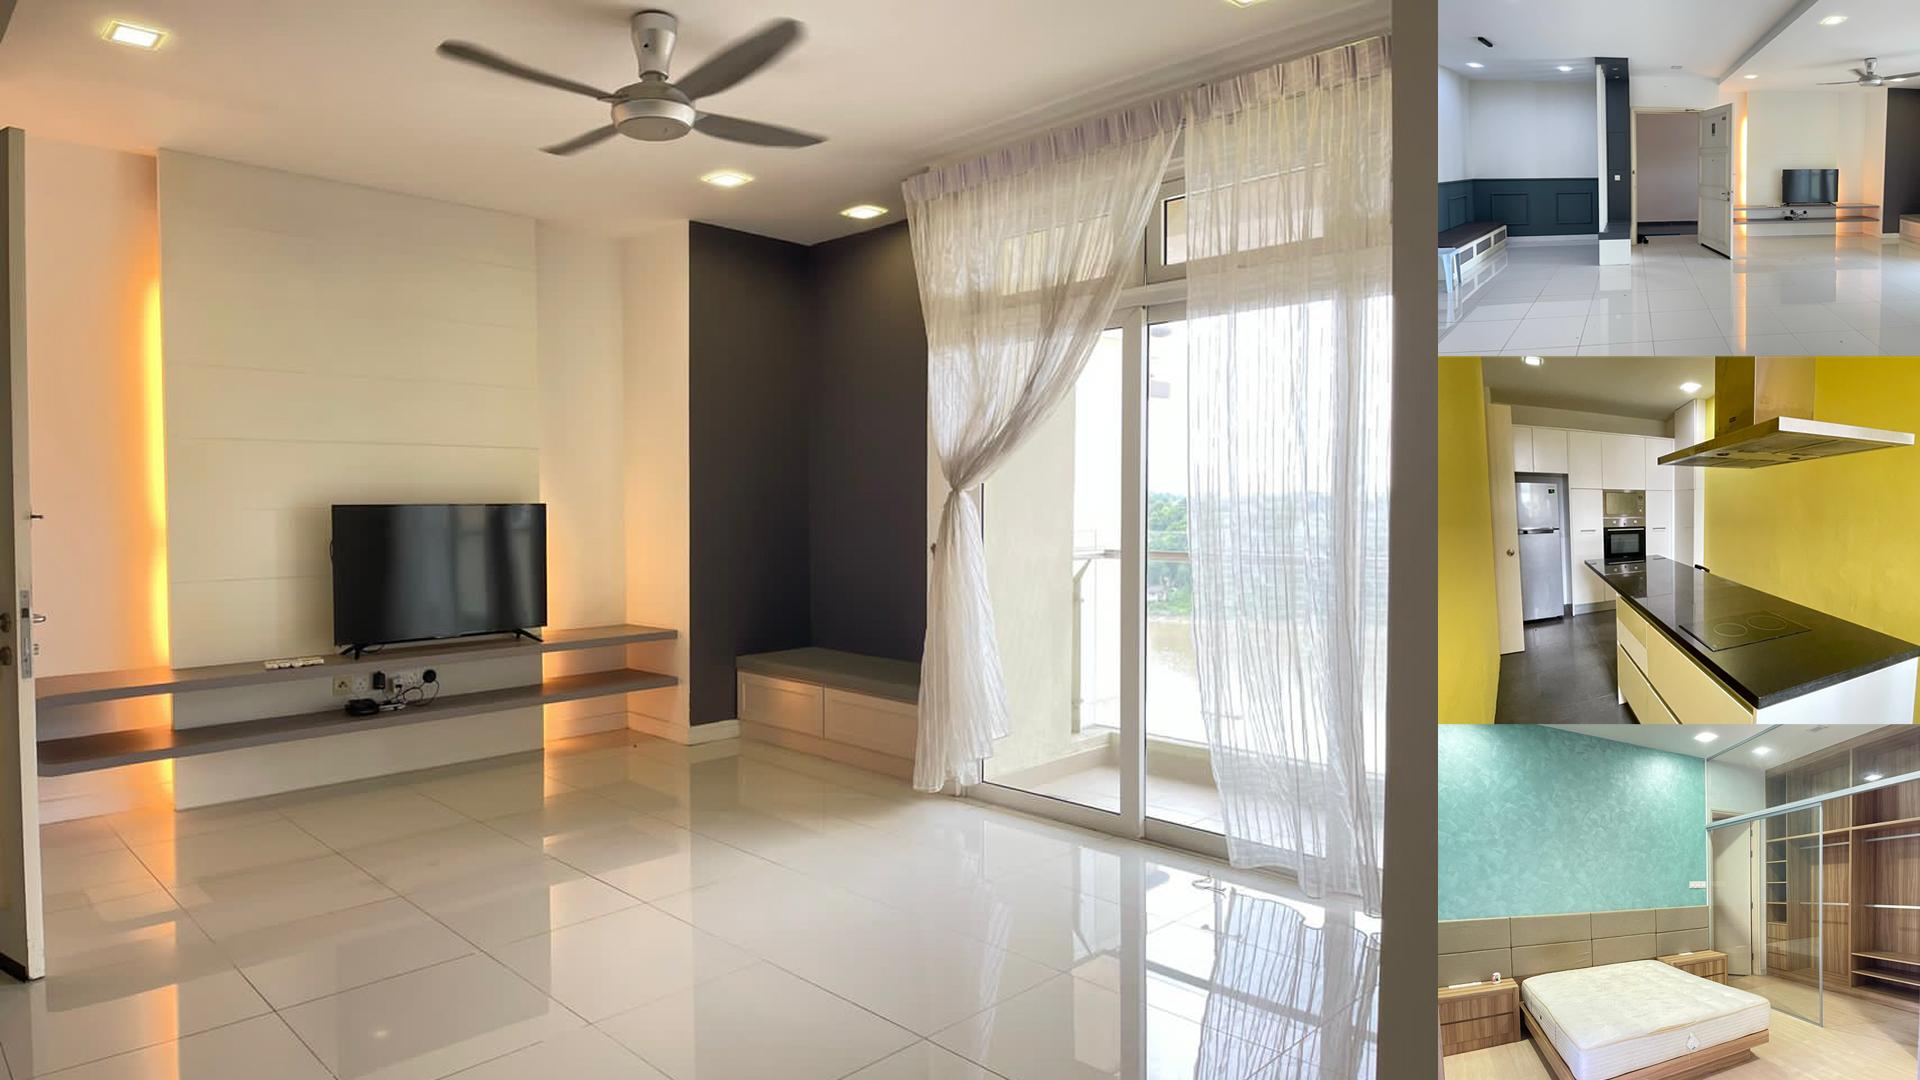 Riverine Sapphire Condominium for Rent & For Sale! Located at Jalan Petanak, Kuching